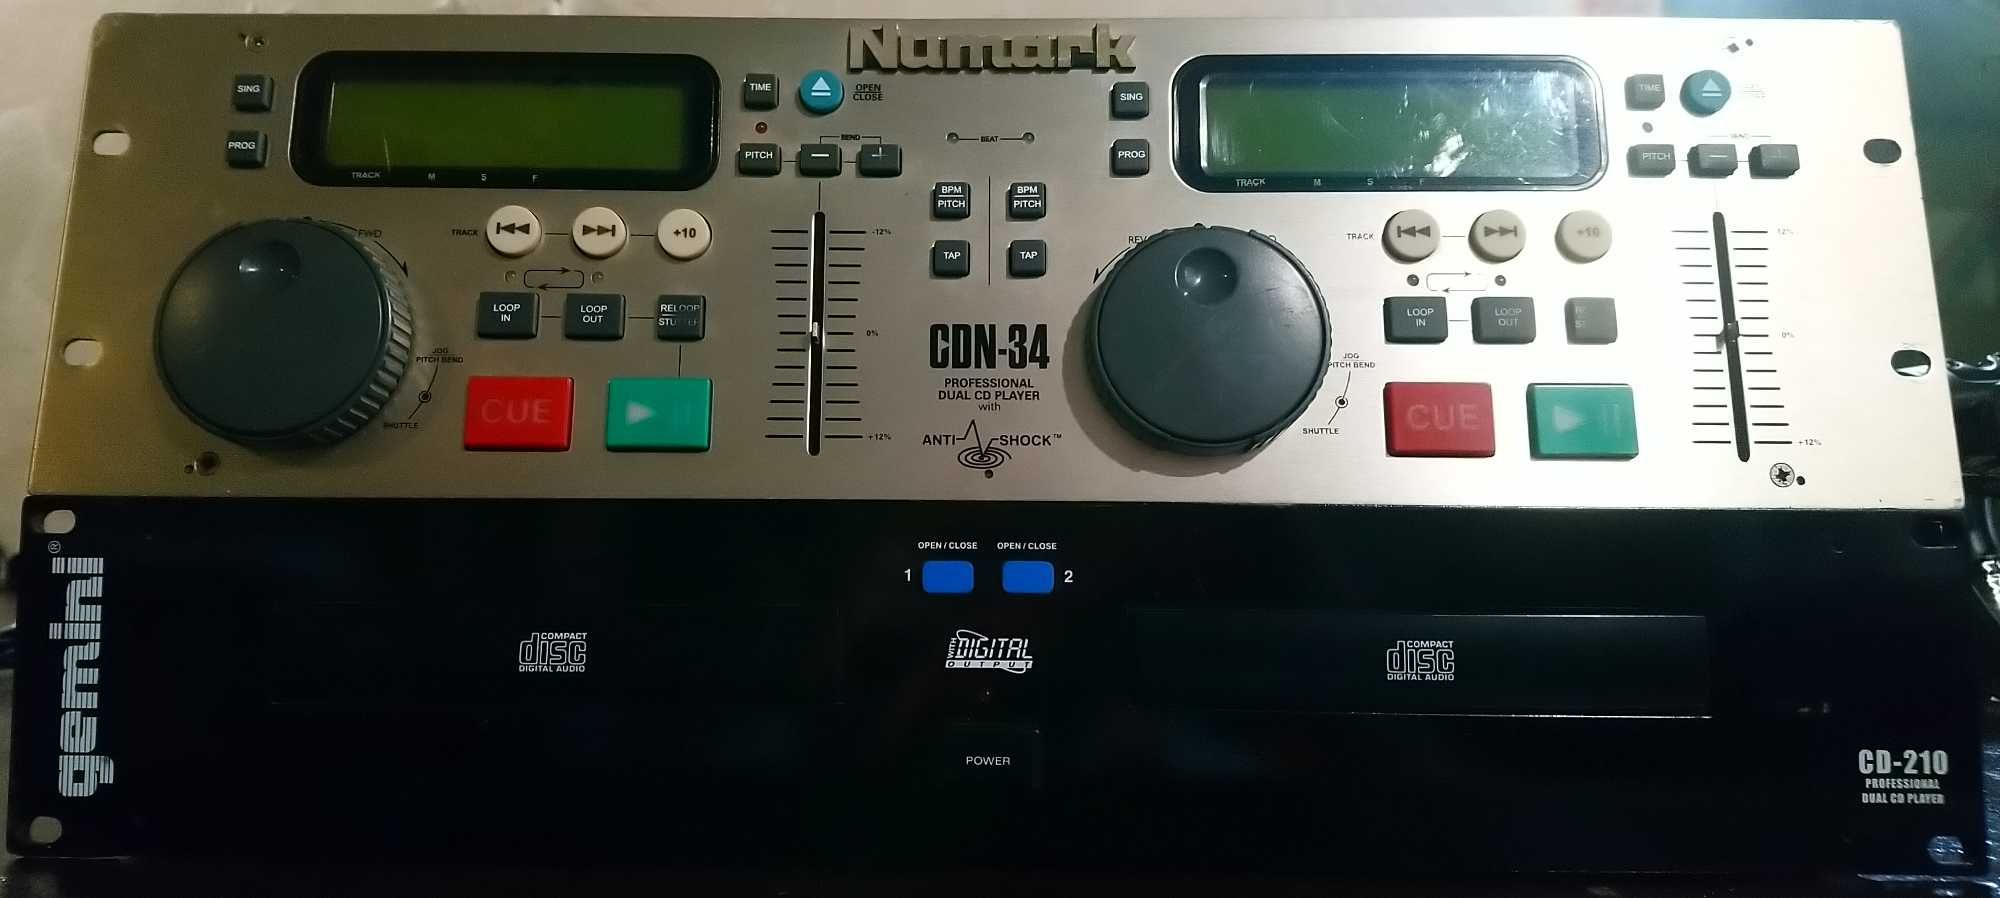 Dual Cd Players: Numark CDN-34, Citronic CD-I & Gemini CD210